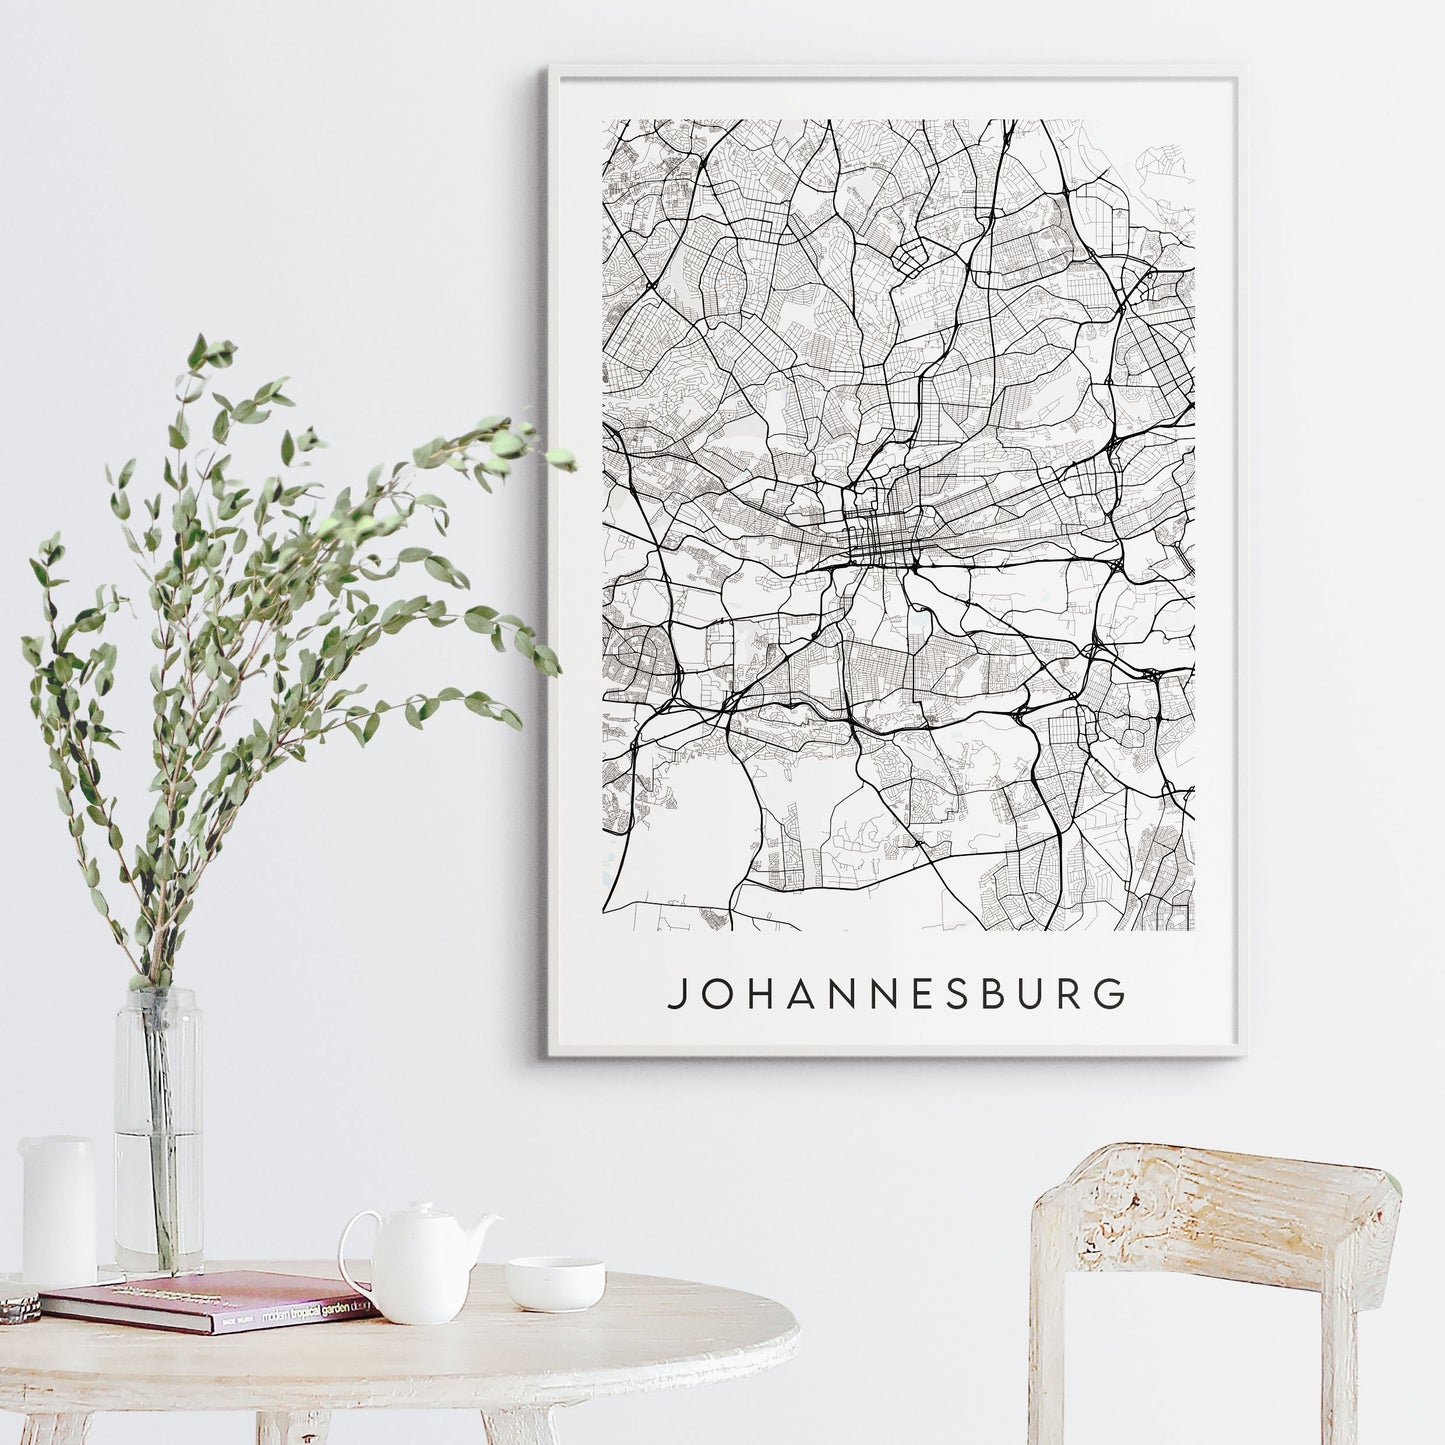 Johannesburg Map Print - South Africa